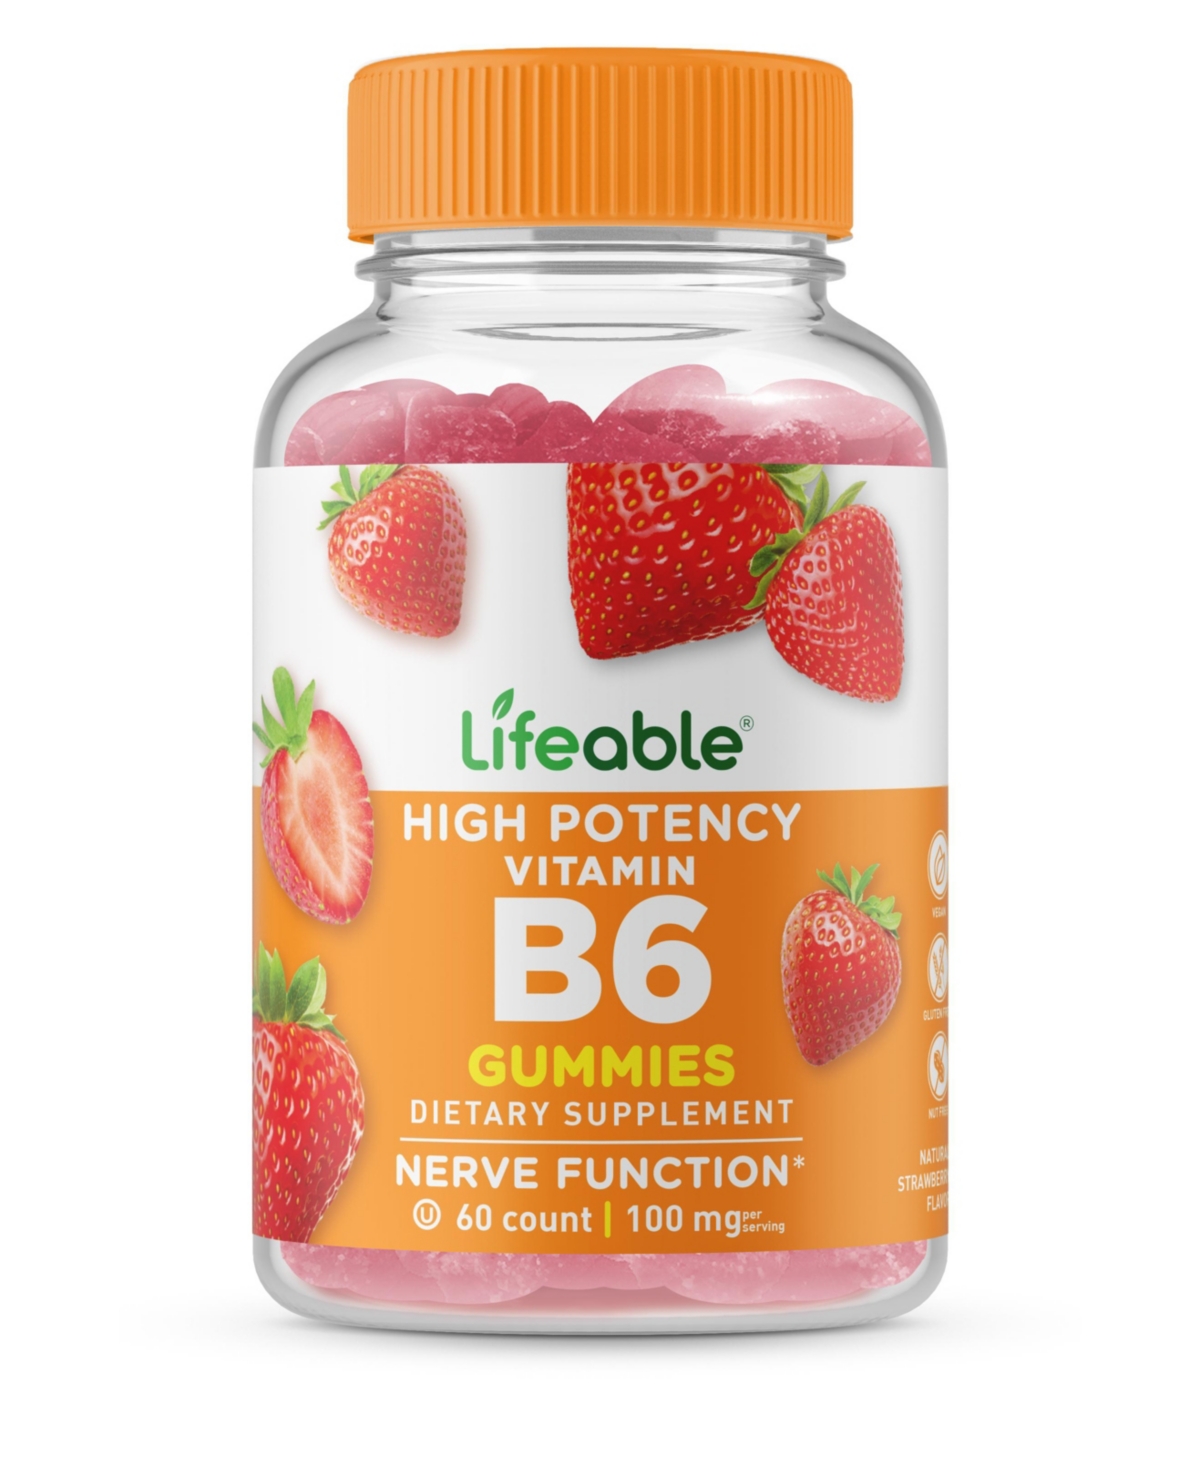 Vitamin B6 100 mg Gummies - Nerve Function And Metabolism - Great Tasting Natural Flavor, Dietary Supplement Vitamins - 60 Gummies - Open Mis